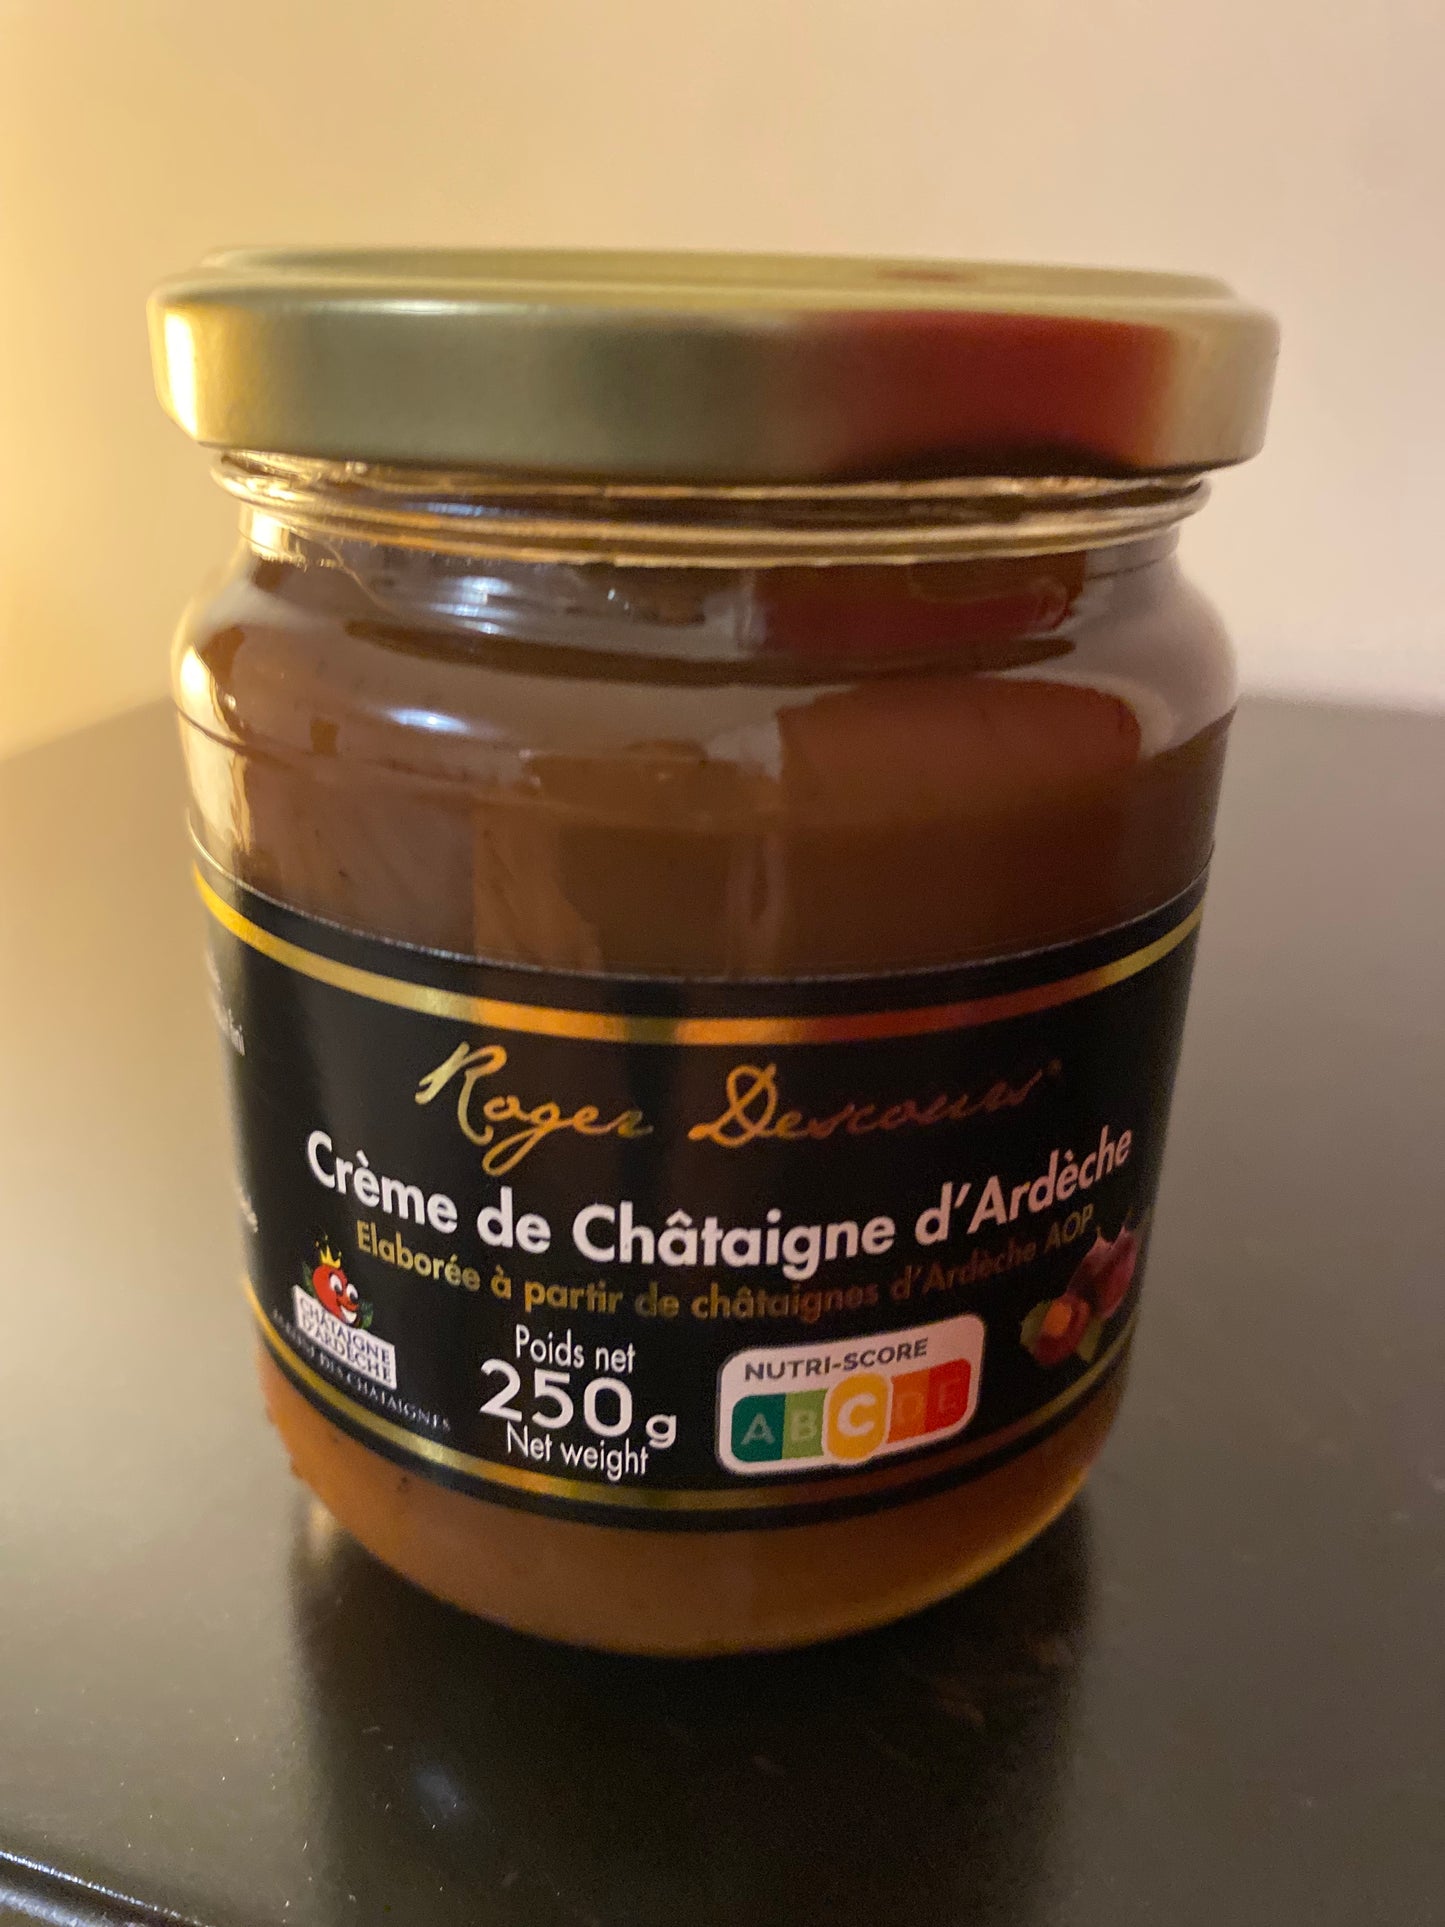 Chestnut Cream - Roger Descours